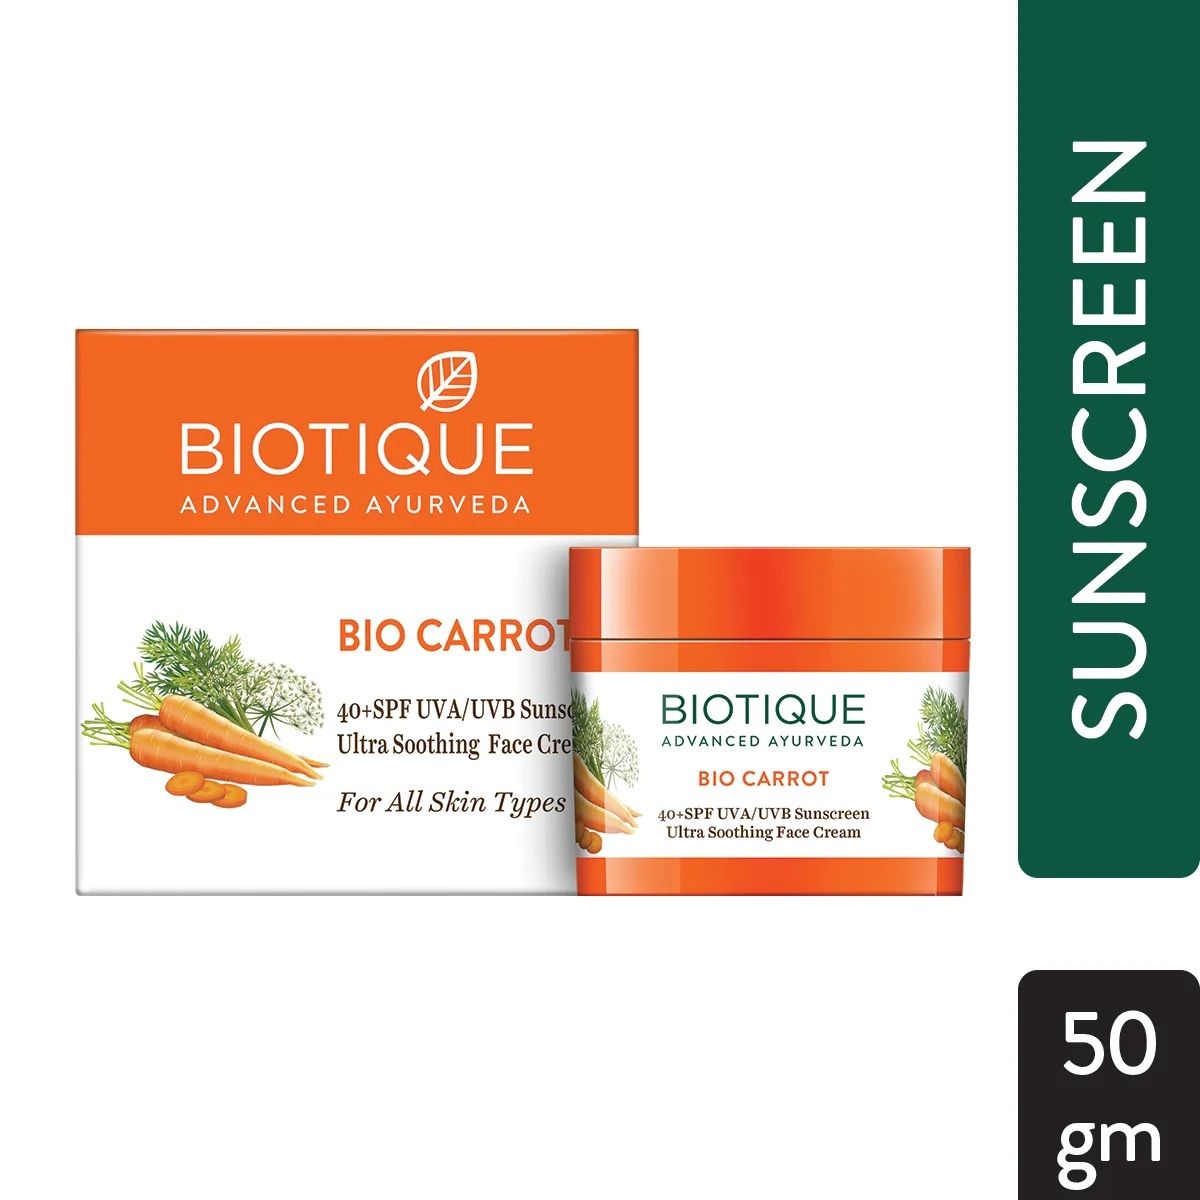 Biotique Bio Carrot Ultra Soothing Face Cream 40+ SPF Sunscreen